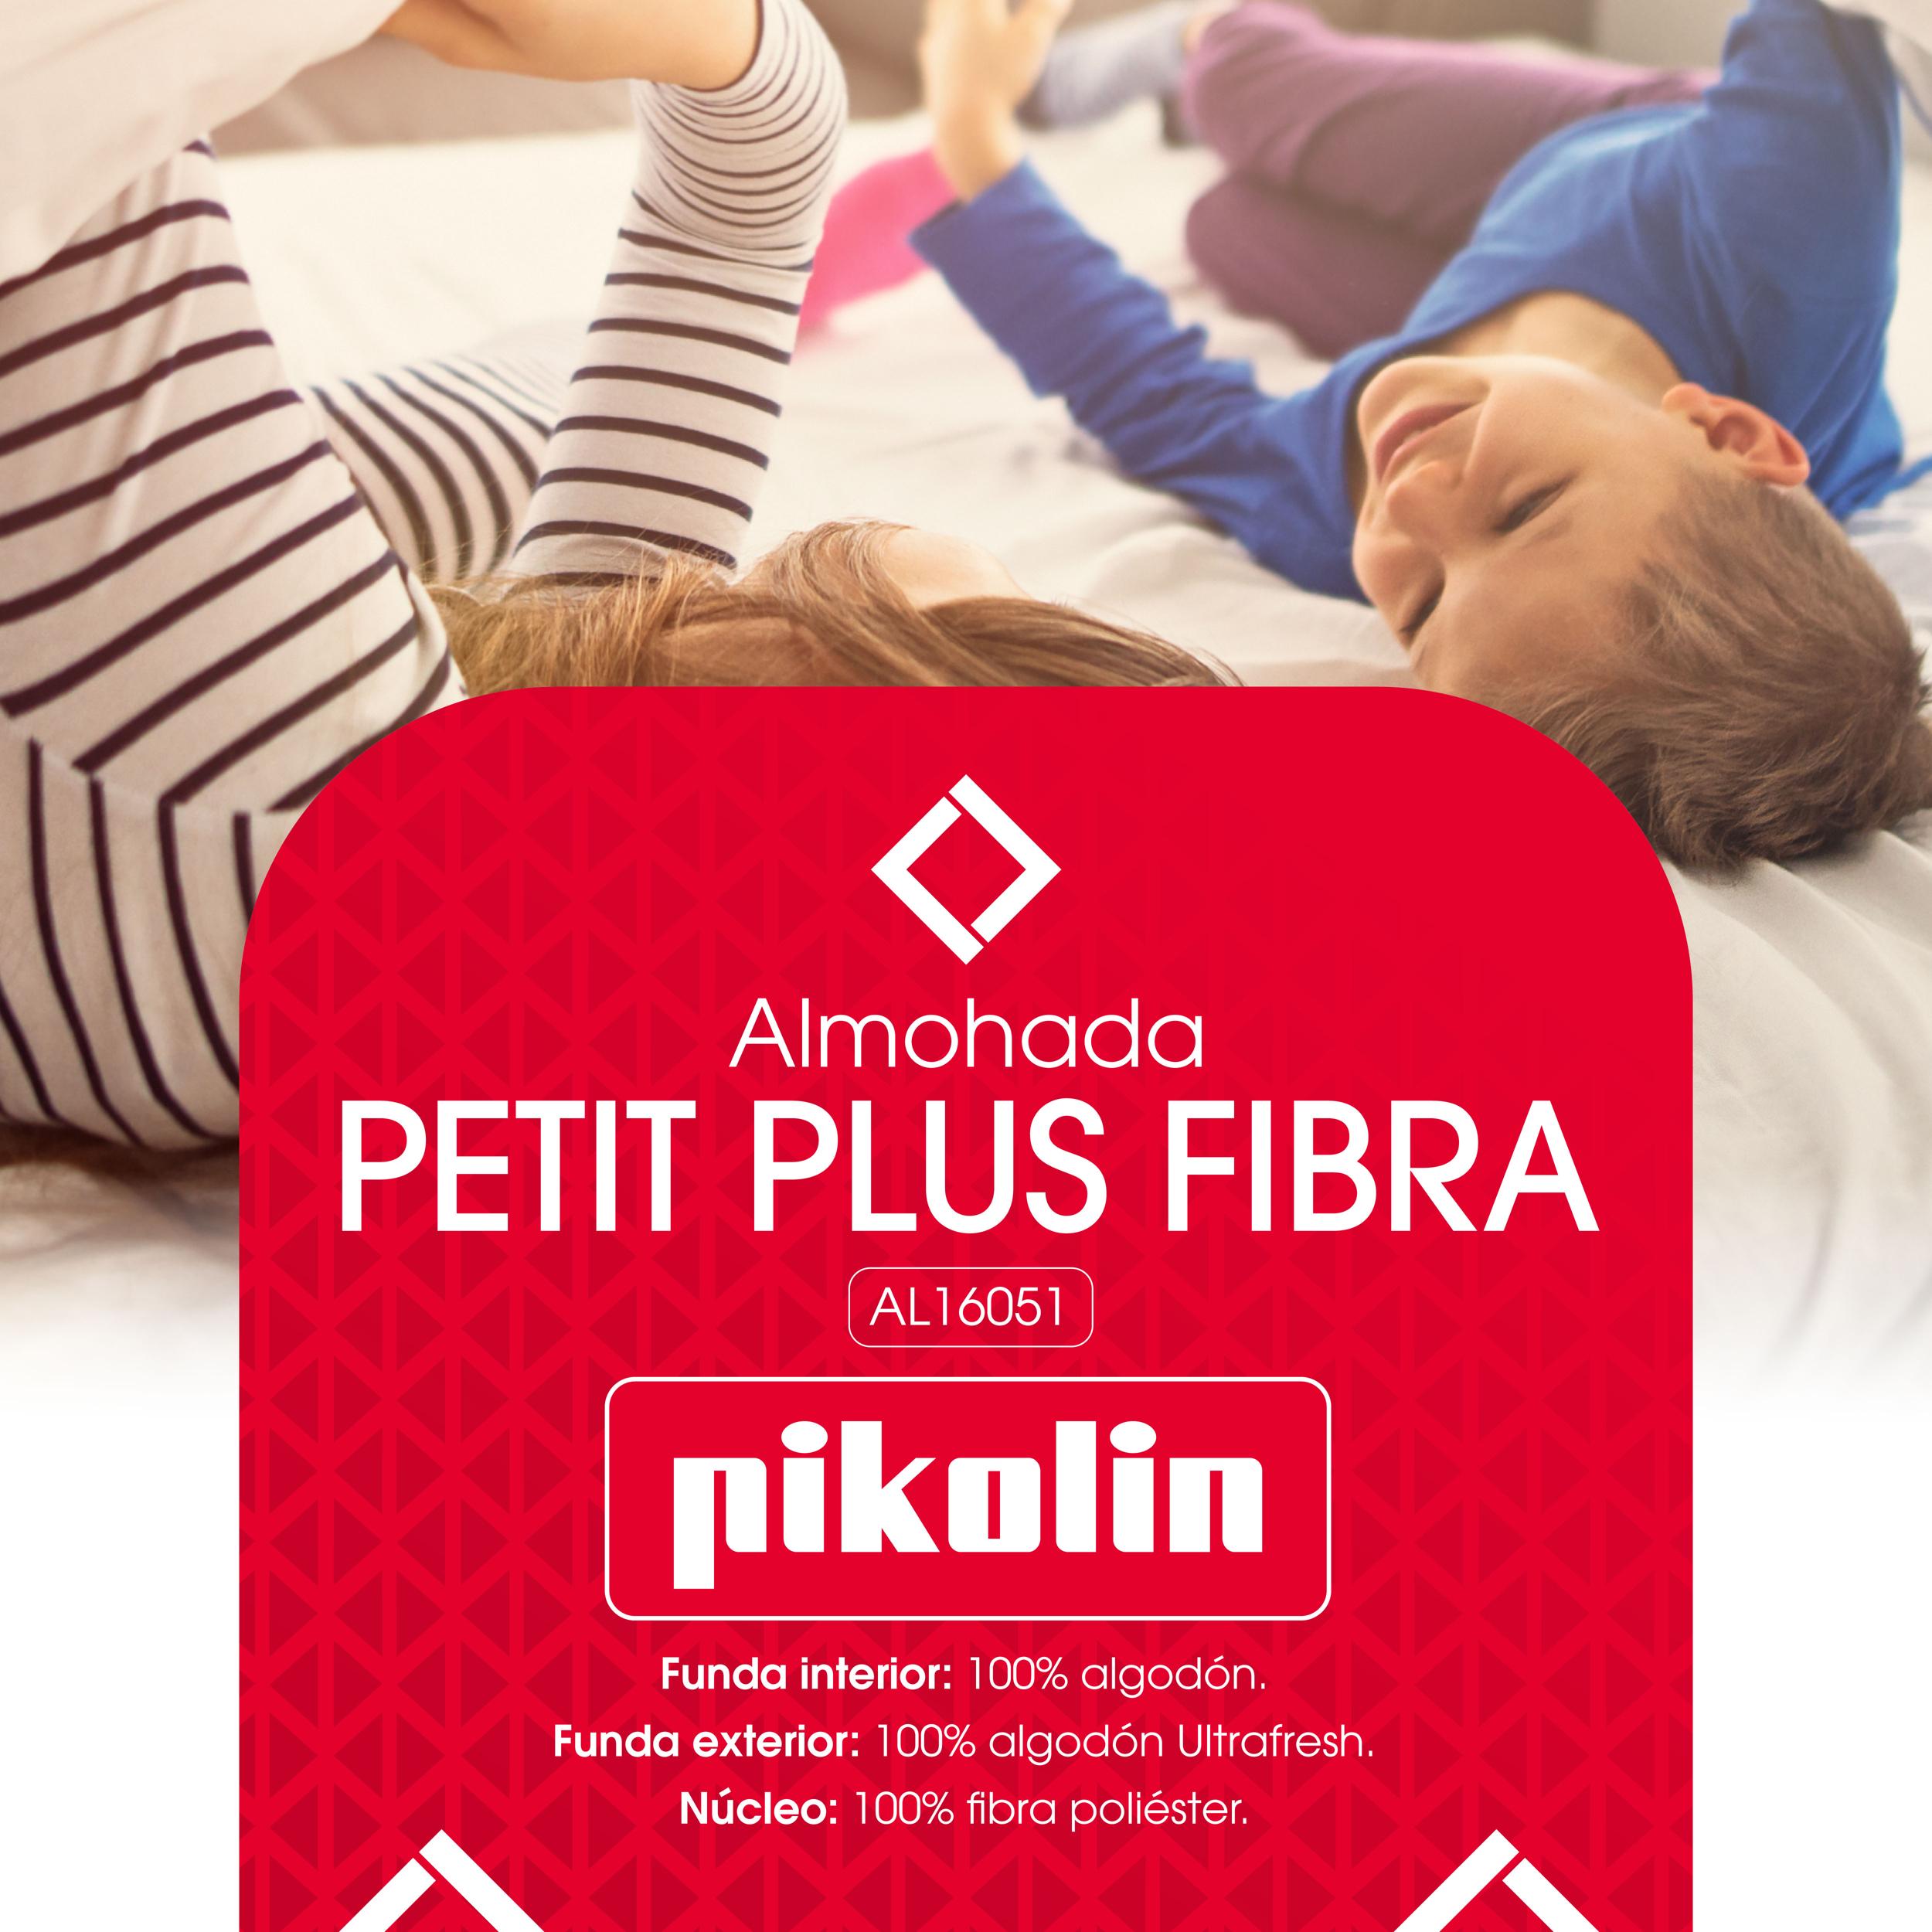 Almohada PIKOLIN Fibra Petit Plus, firmeza baja, tratamiento Ultrafresh